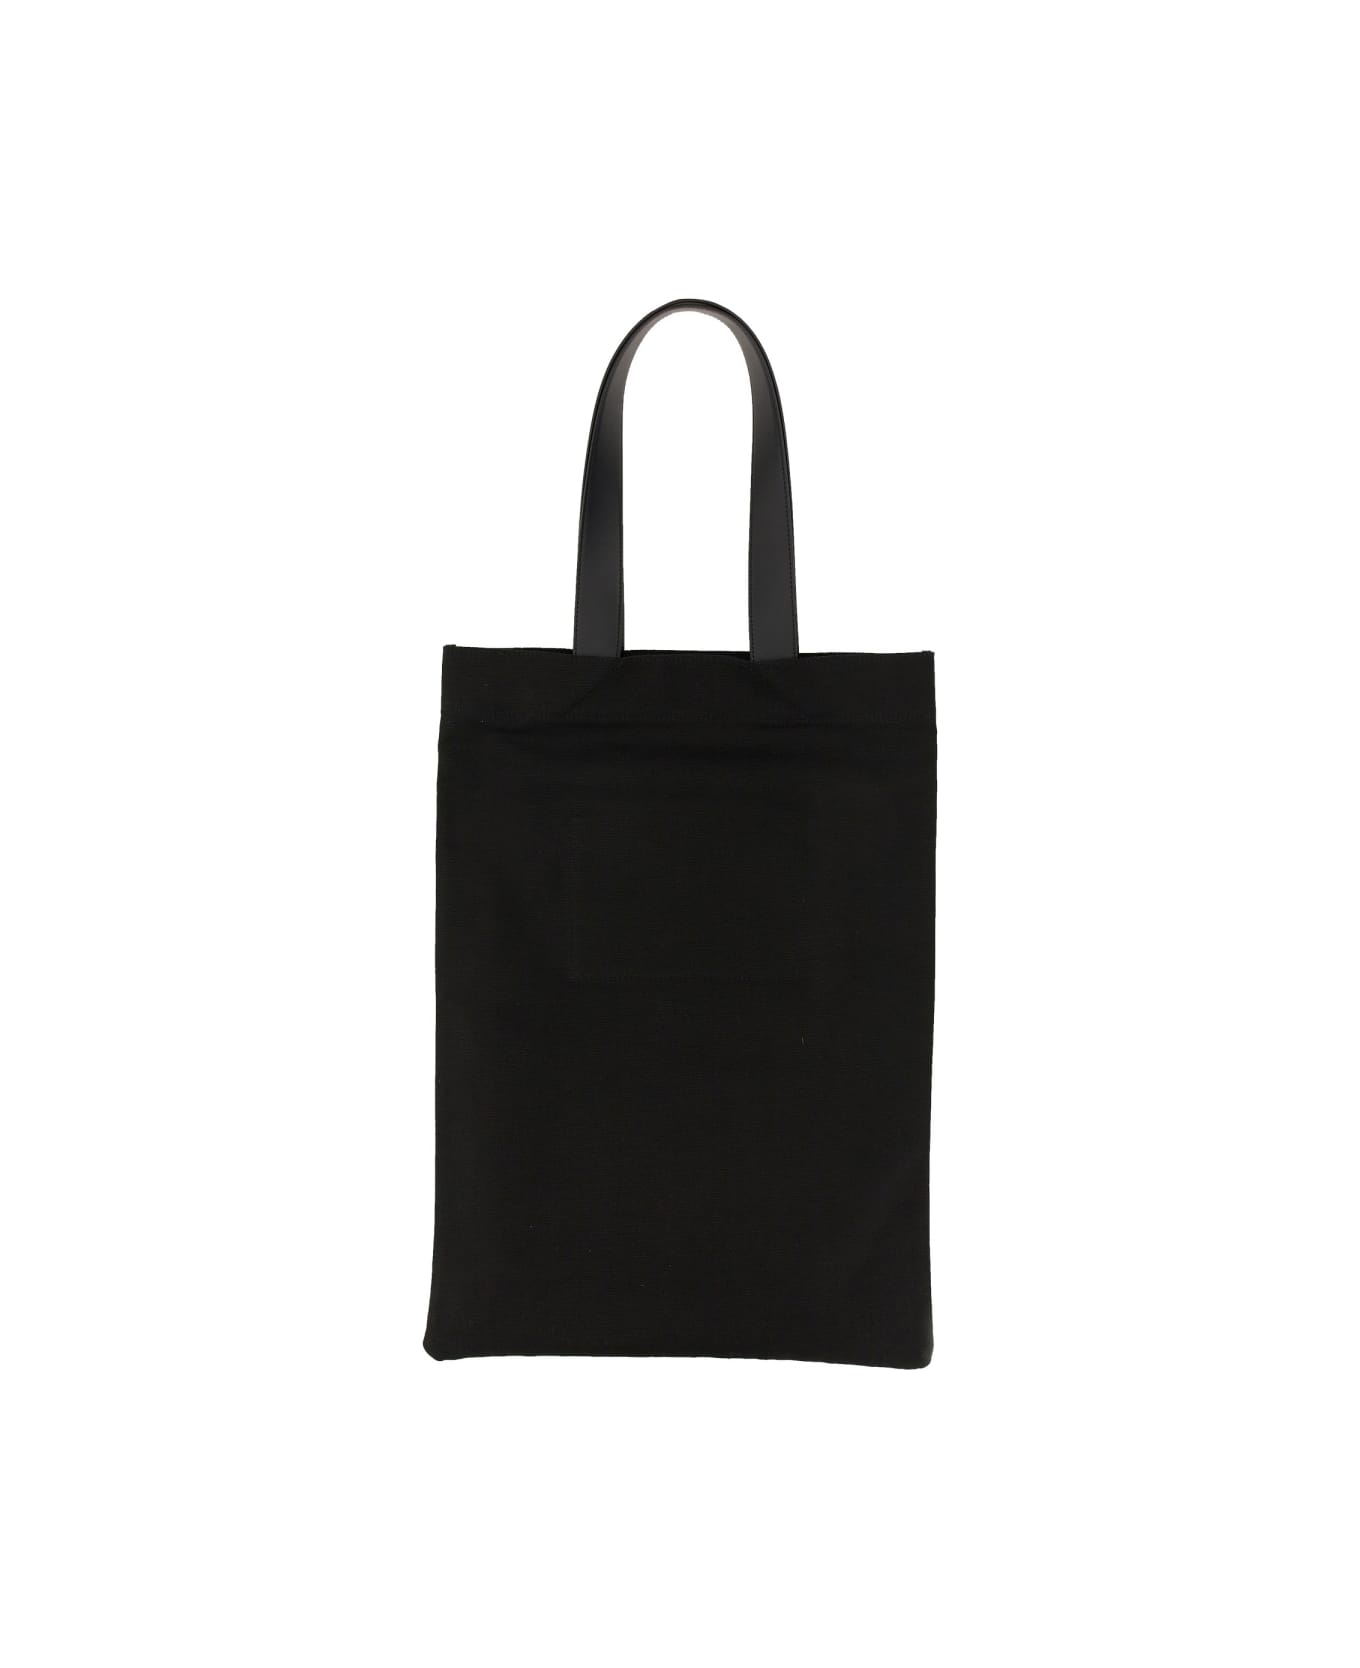 Jil Sander Black Canvas Shopping Bag - 001 ショルダーバッグ